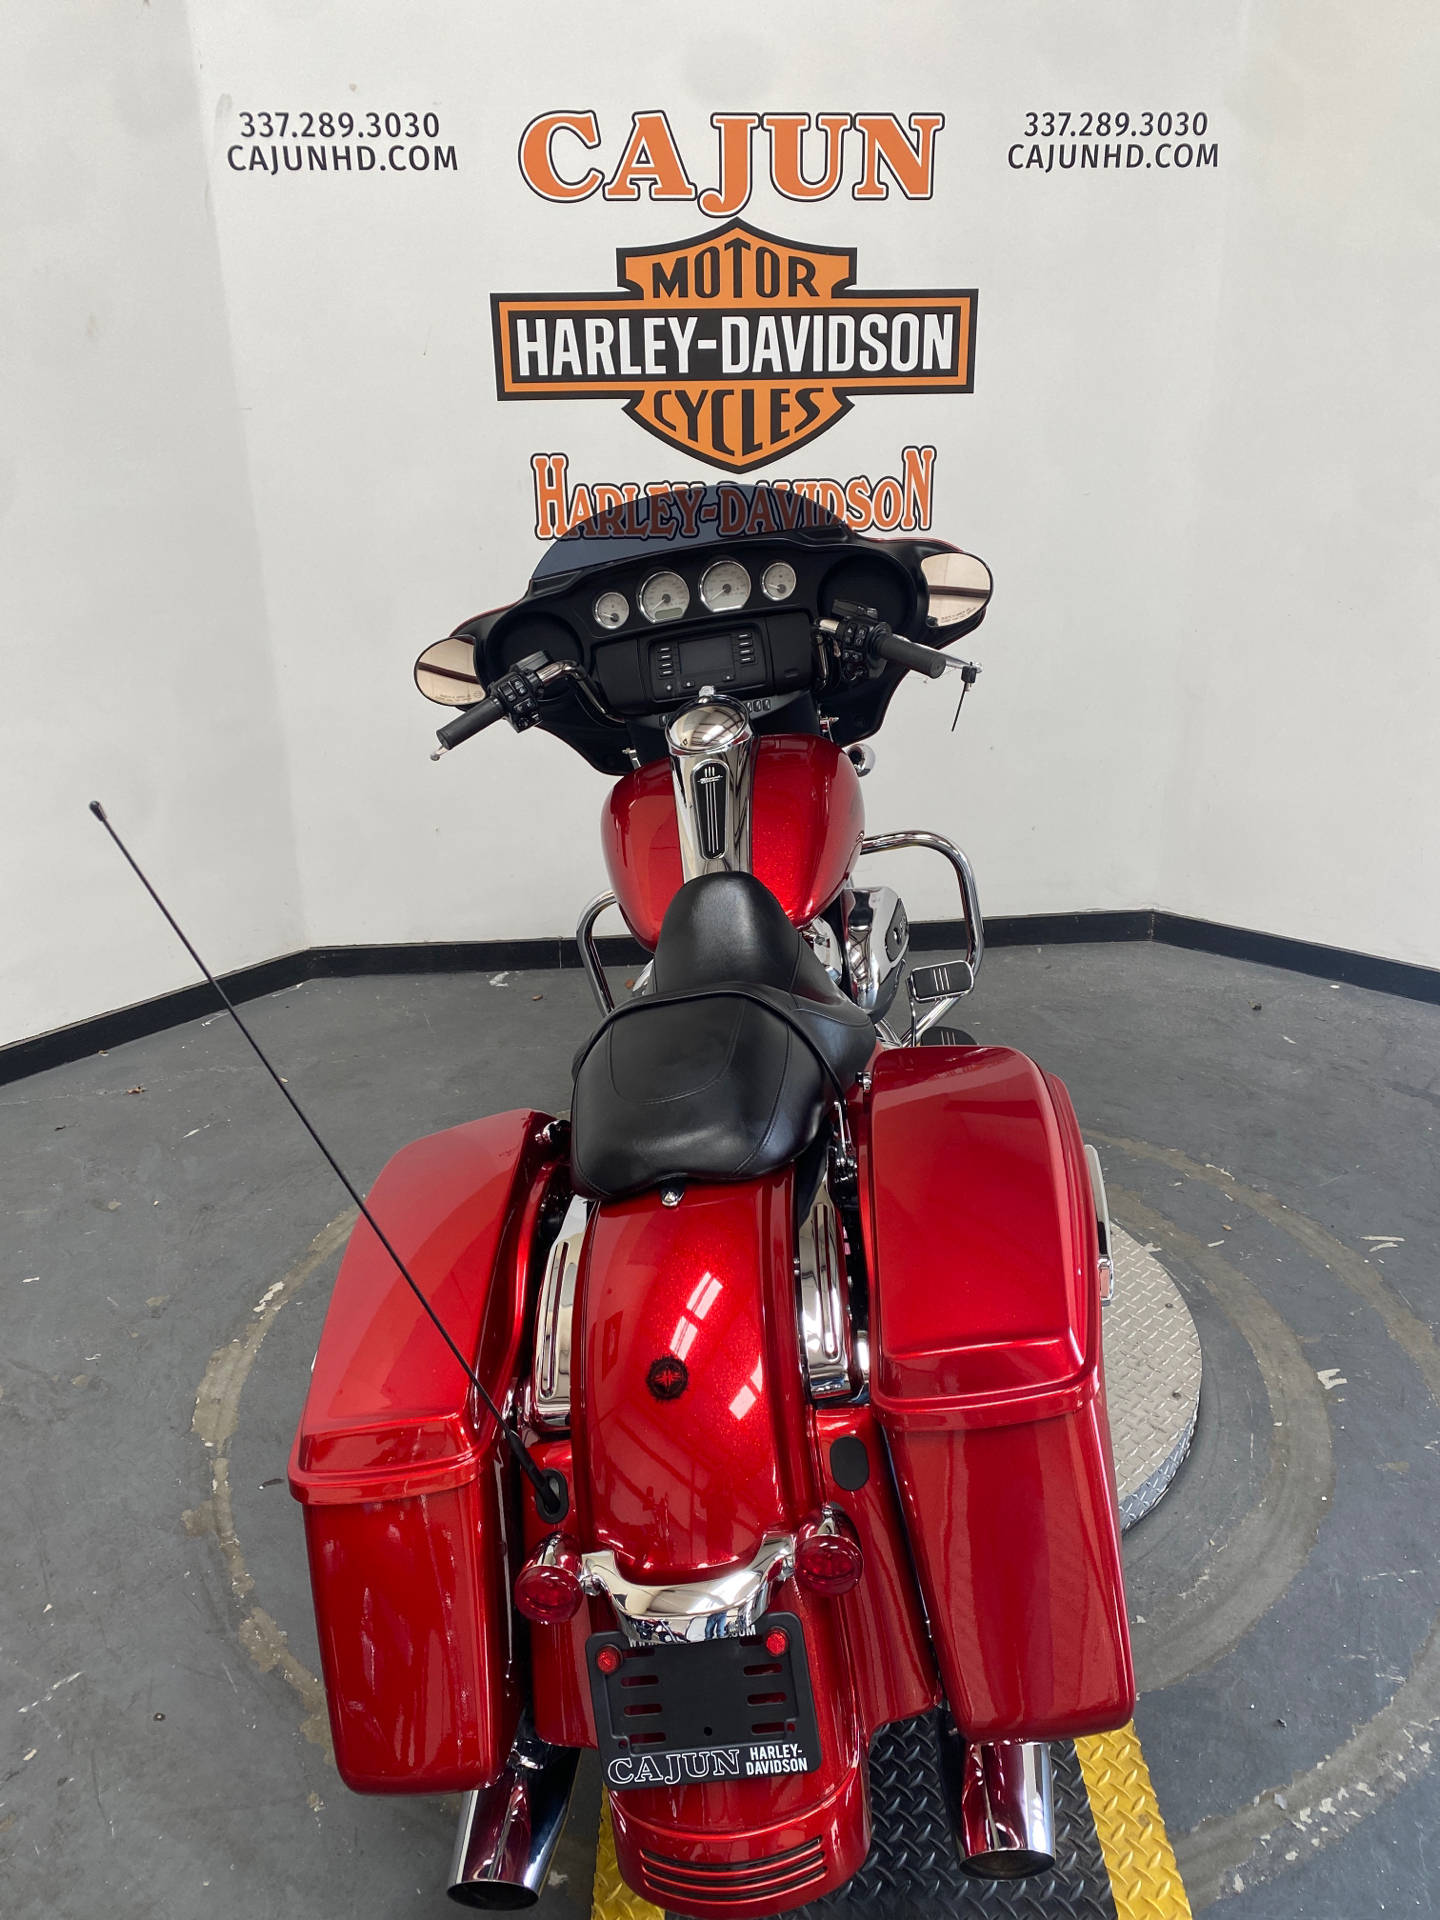 2018 Harley-Davidson Street Glide used - Photo 7